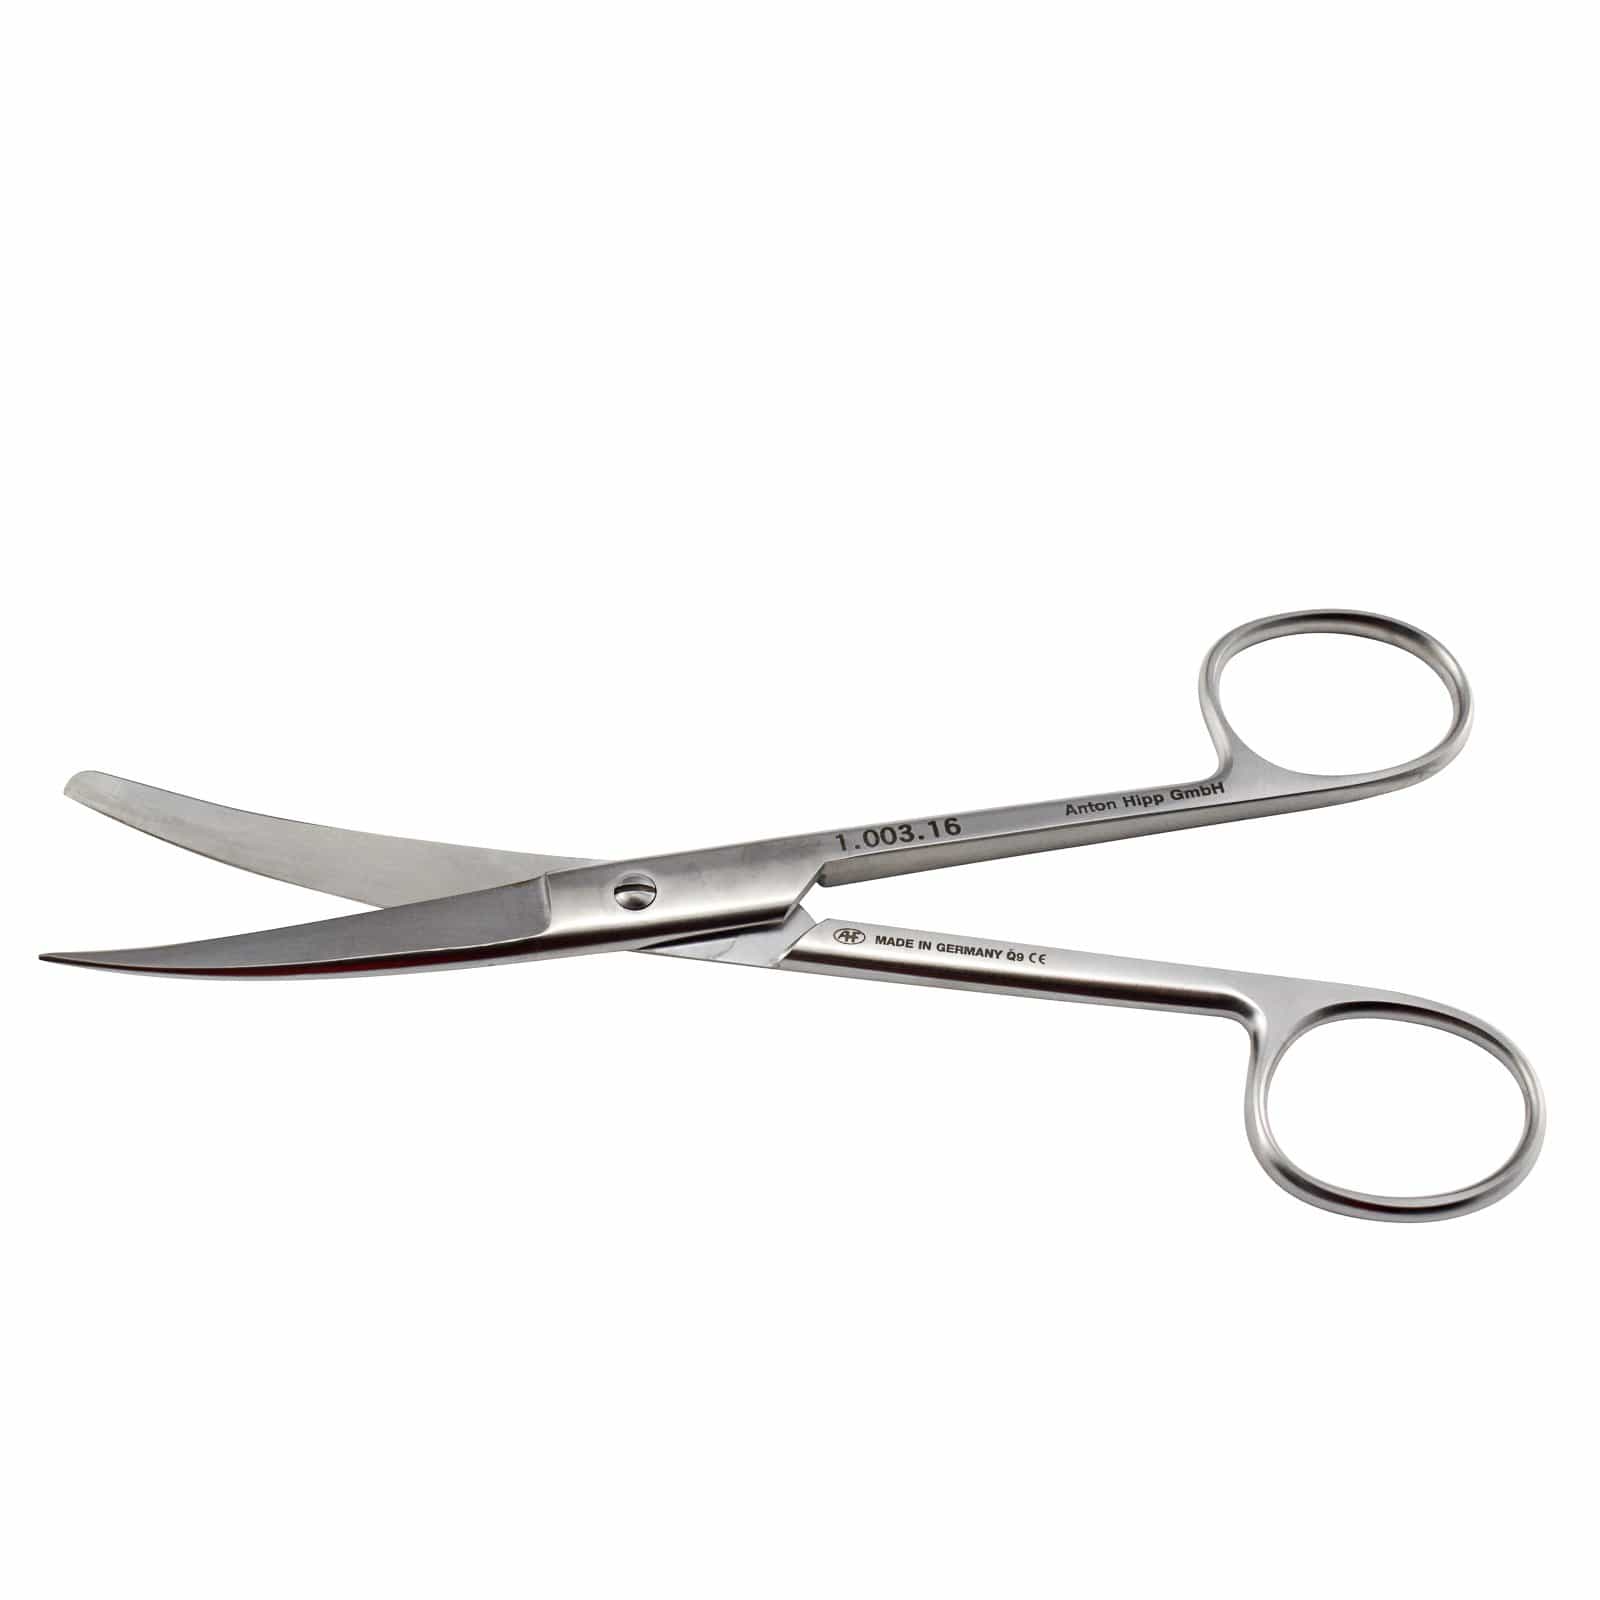 Hipp Surgical Instruments 16.5cm / Curved / Sharp/Blunt Hipp Surgical Scissors